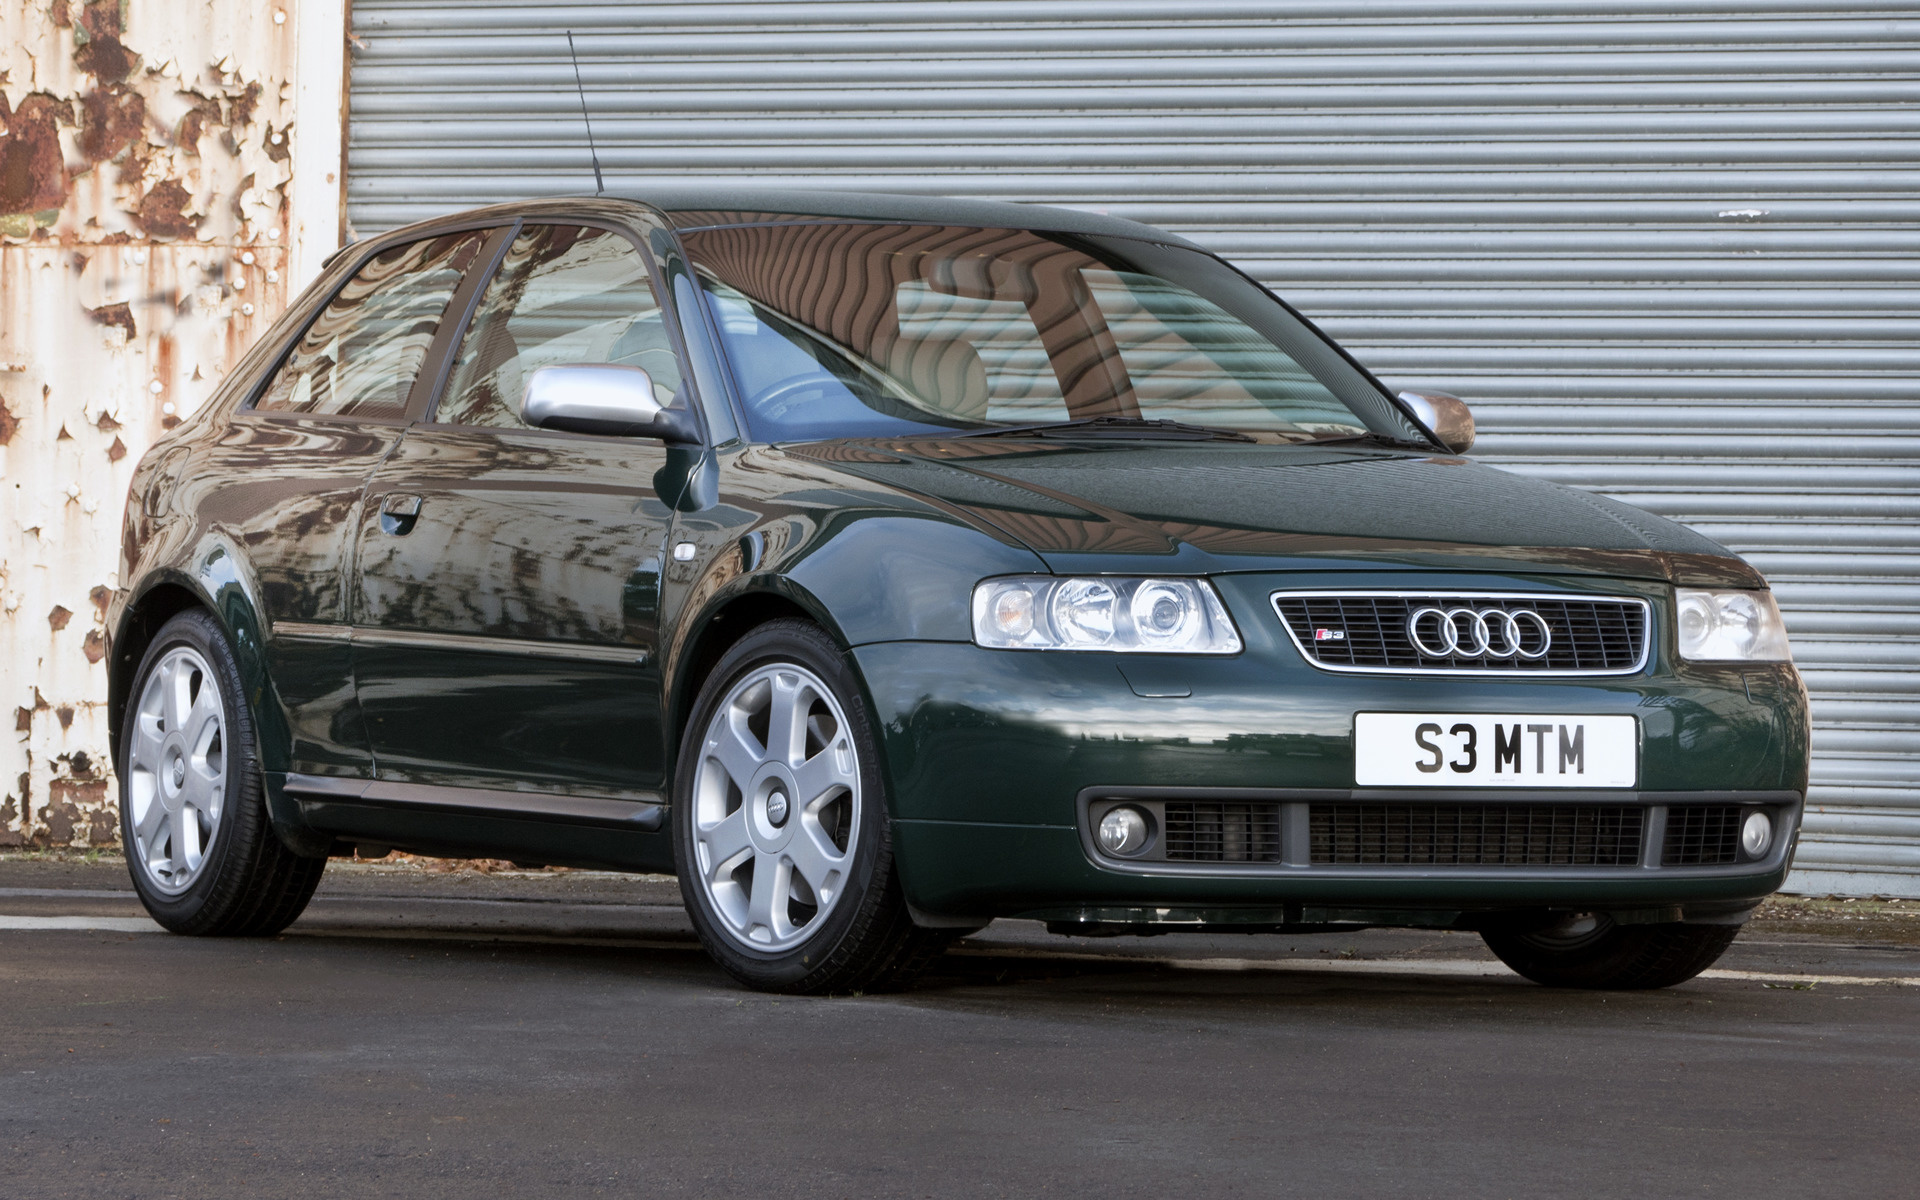 Audi S3 (UK) and HD Image